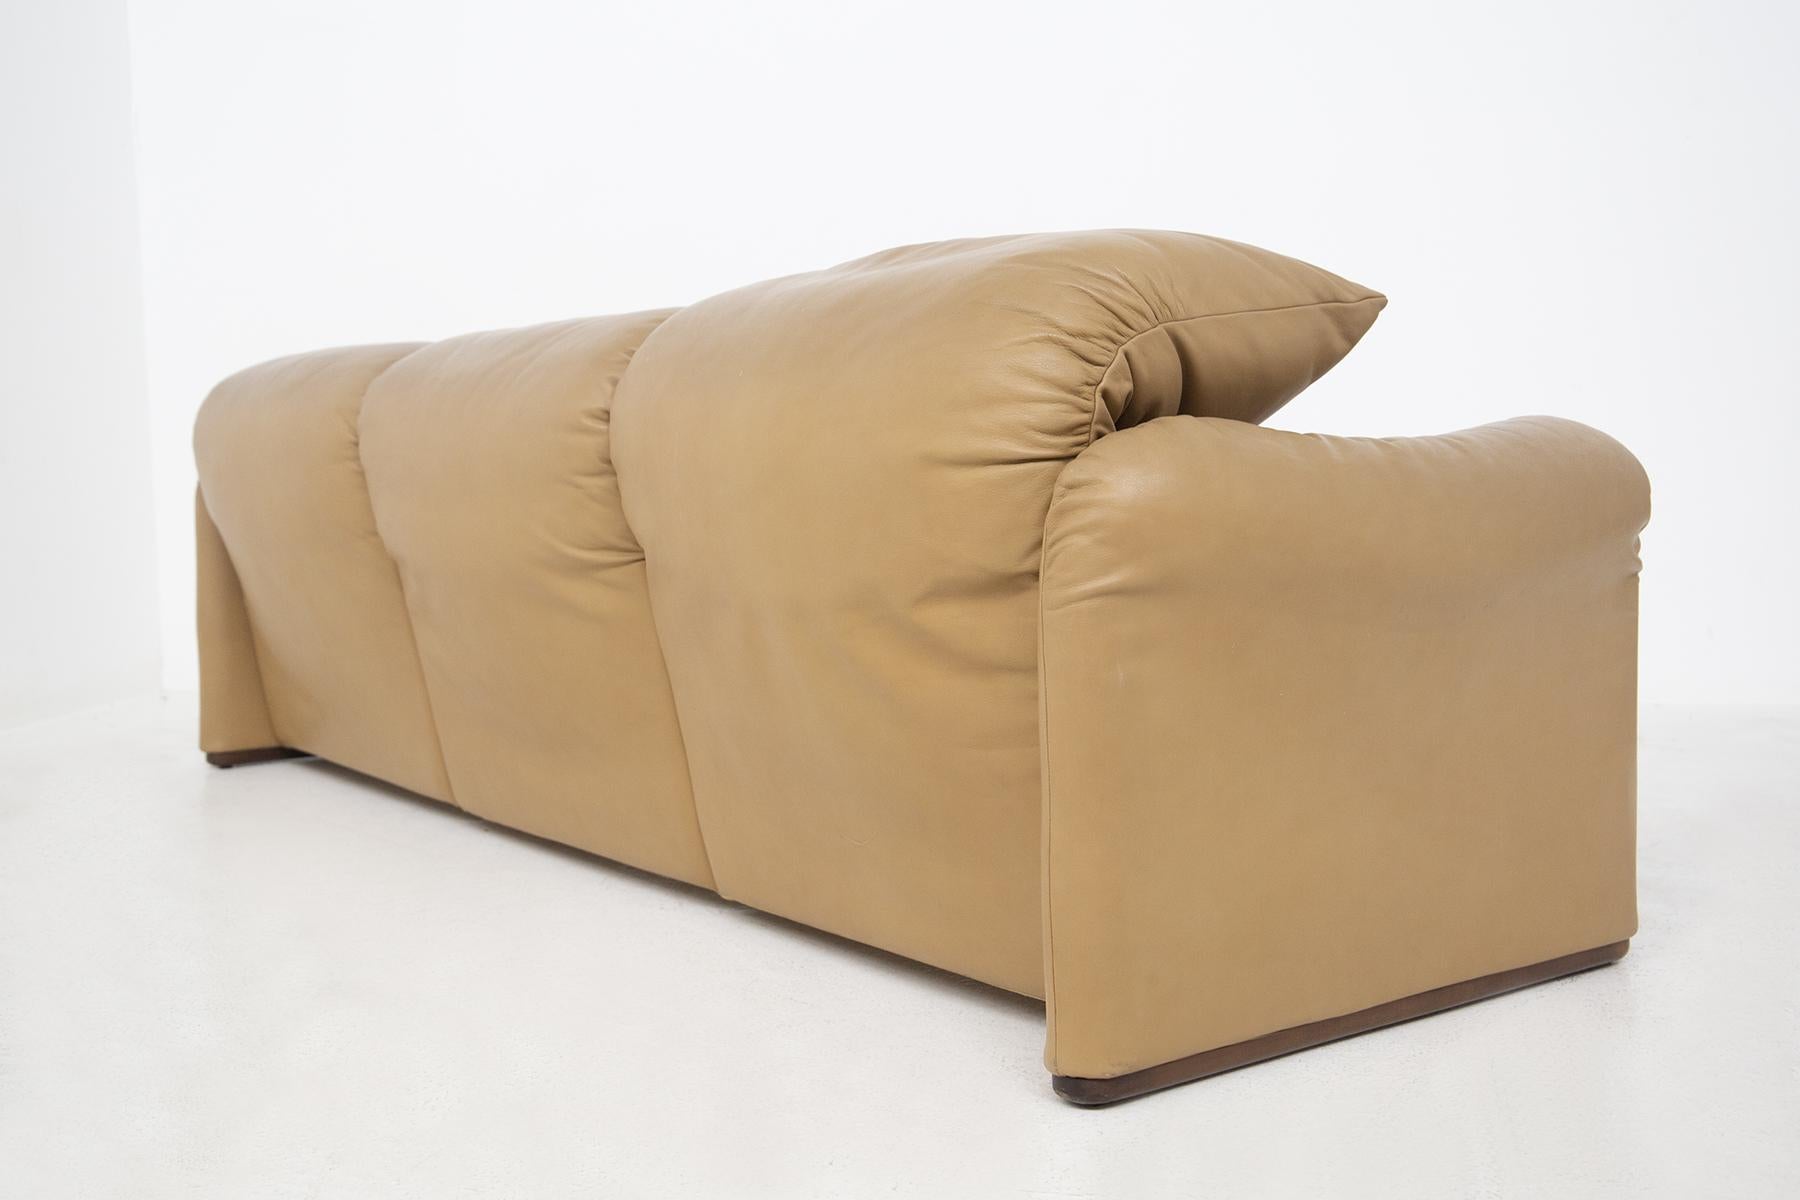 Maralunga Vintage Leather Sofa by Vico Magistretti for Cassina 1